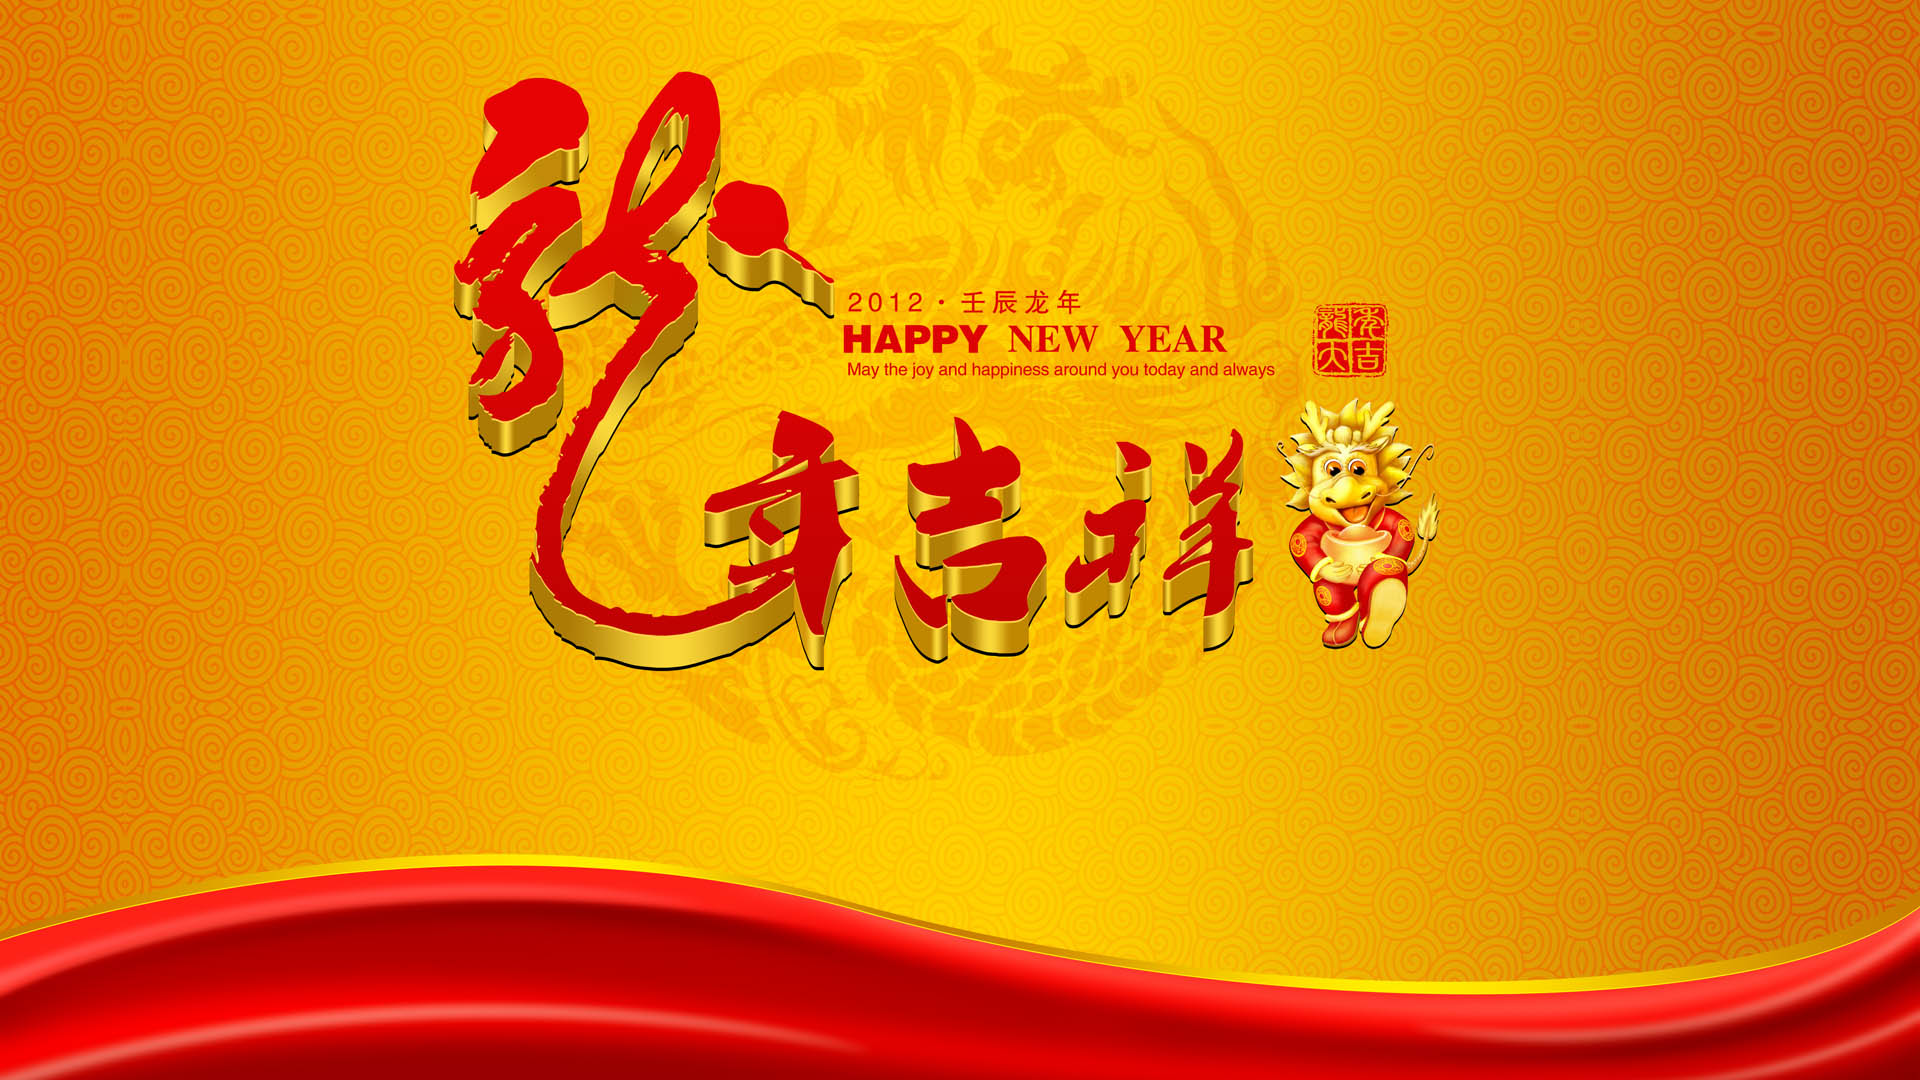 Dragon Year 2012 Spring Festival desktop wallpaper